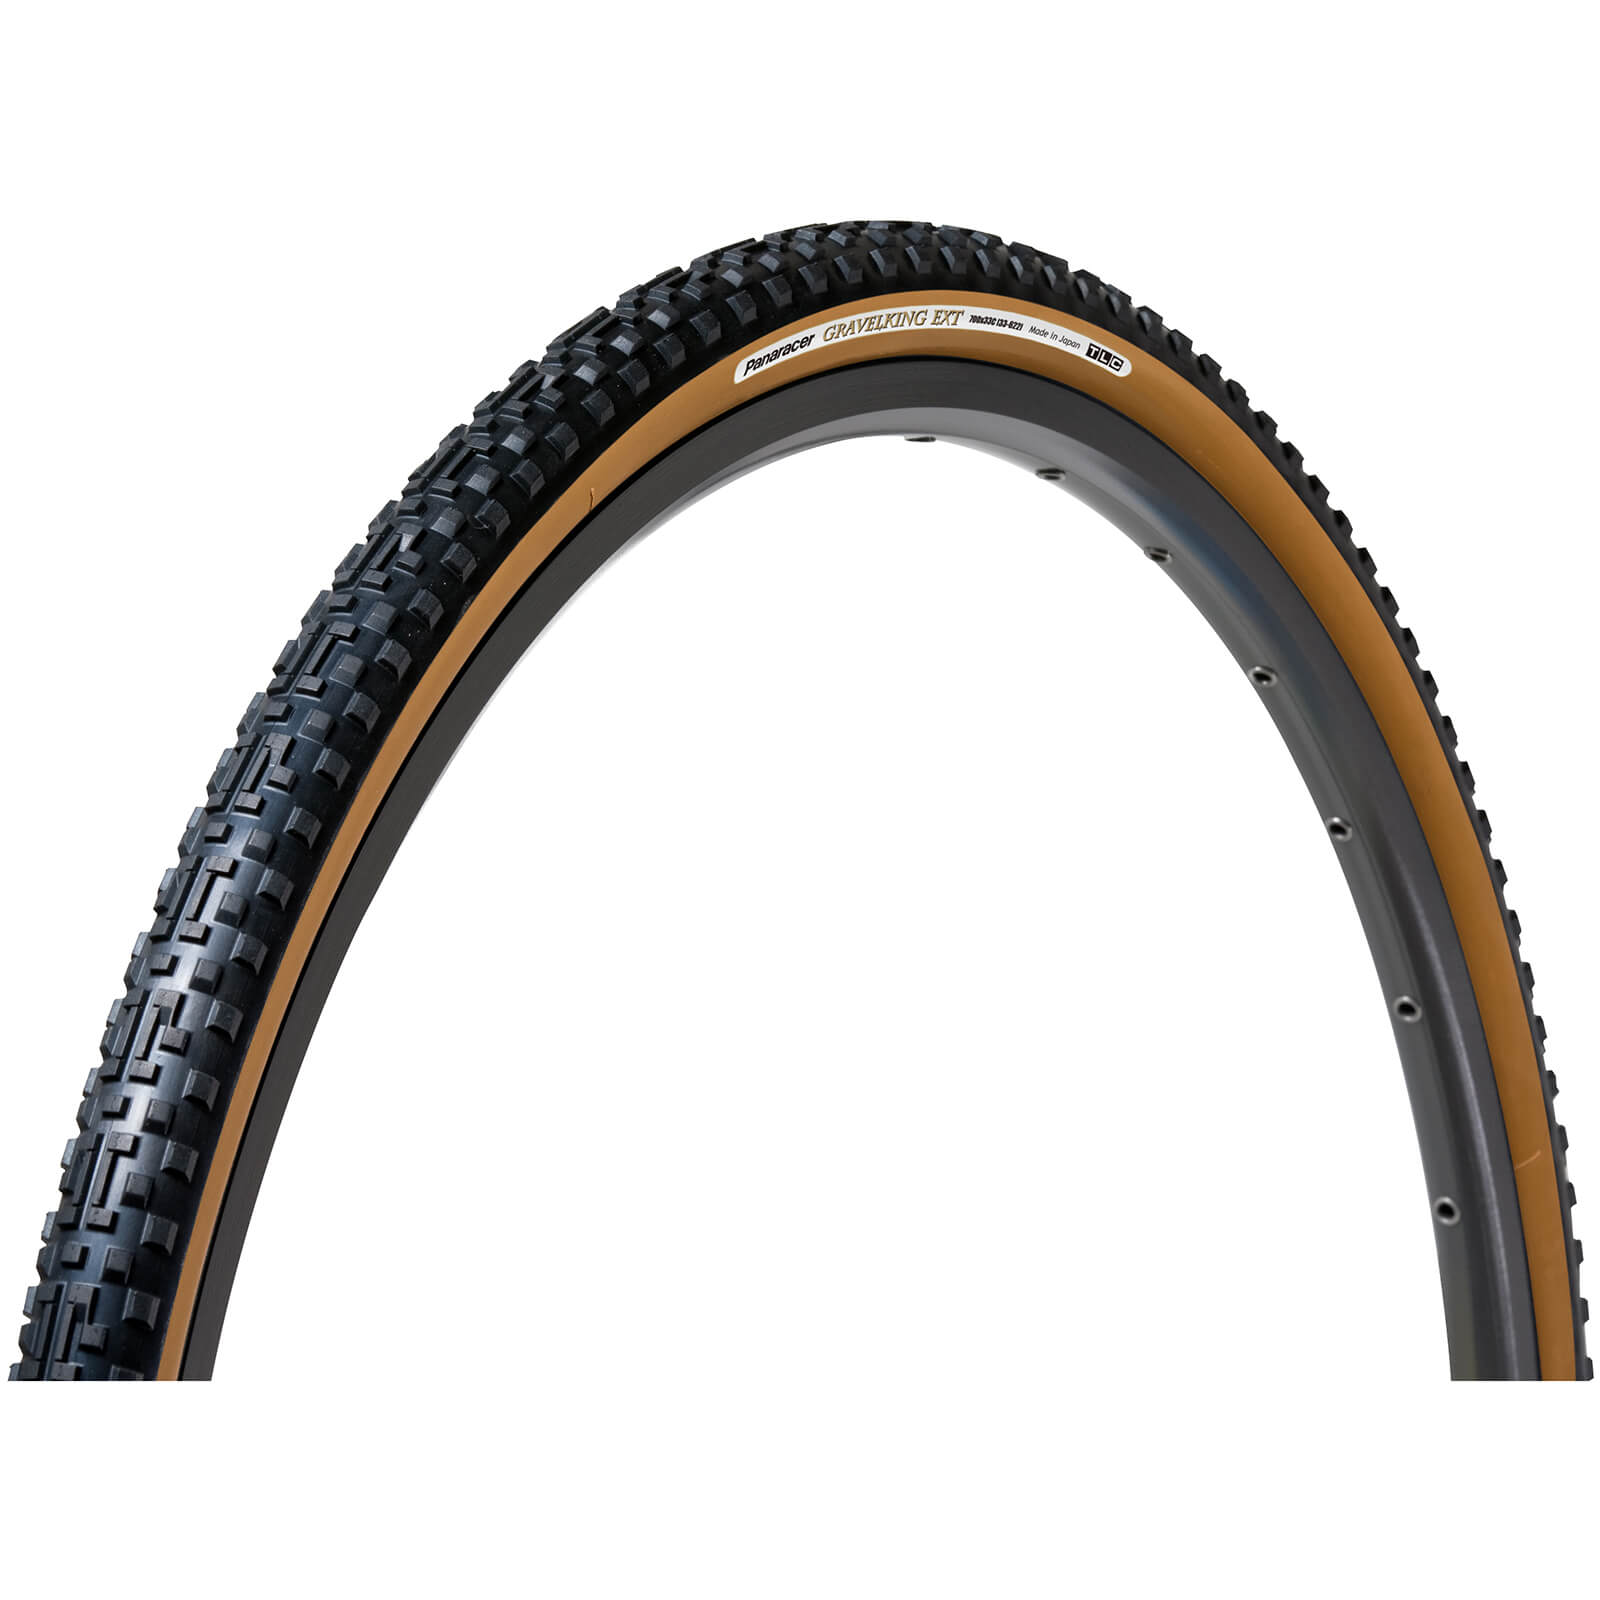 Panaracer Gravel King EXT TLC Folding Gravel Tyre - 700 x 35C - black/brown